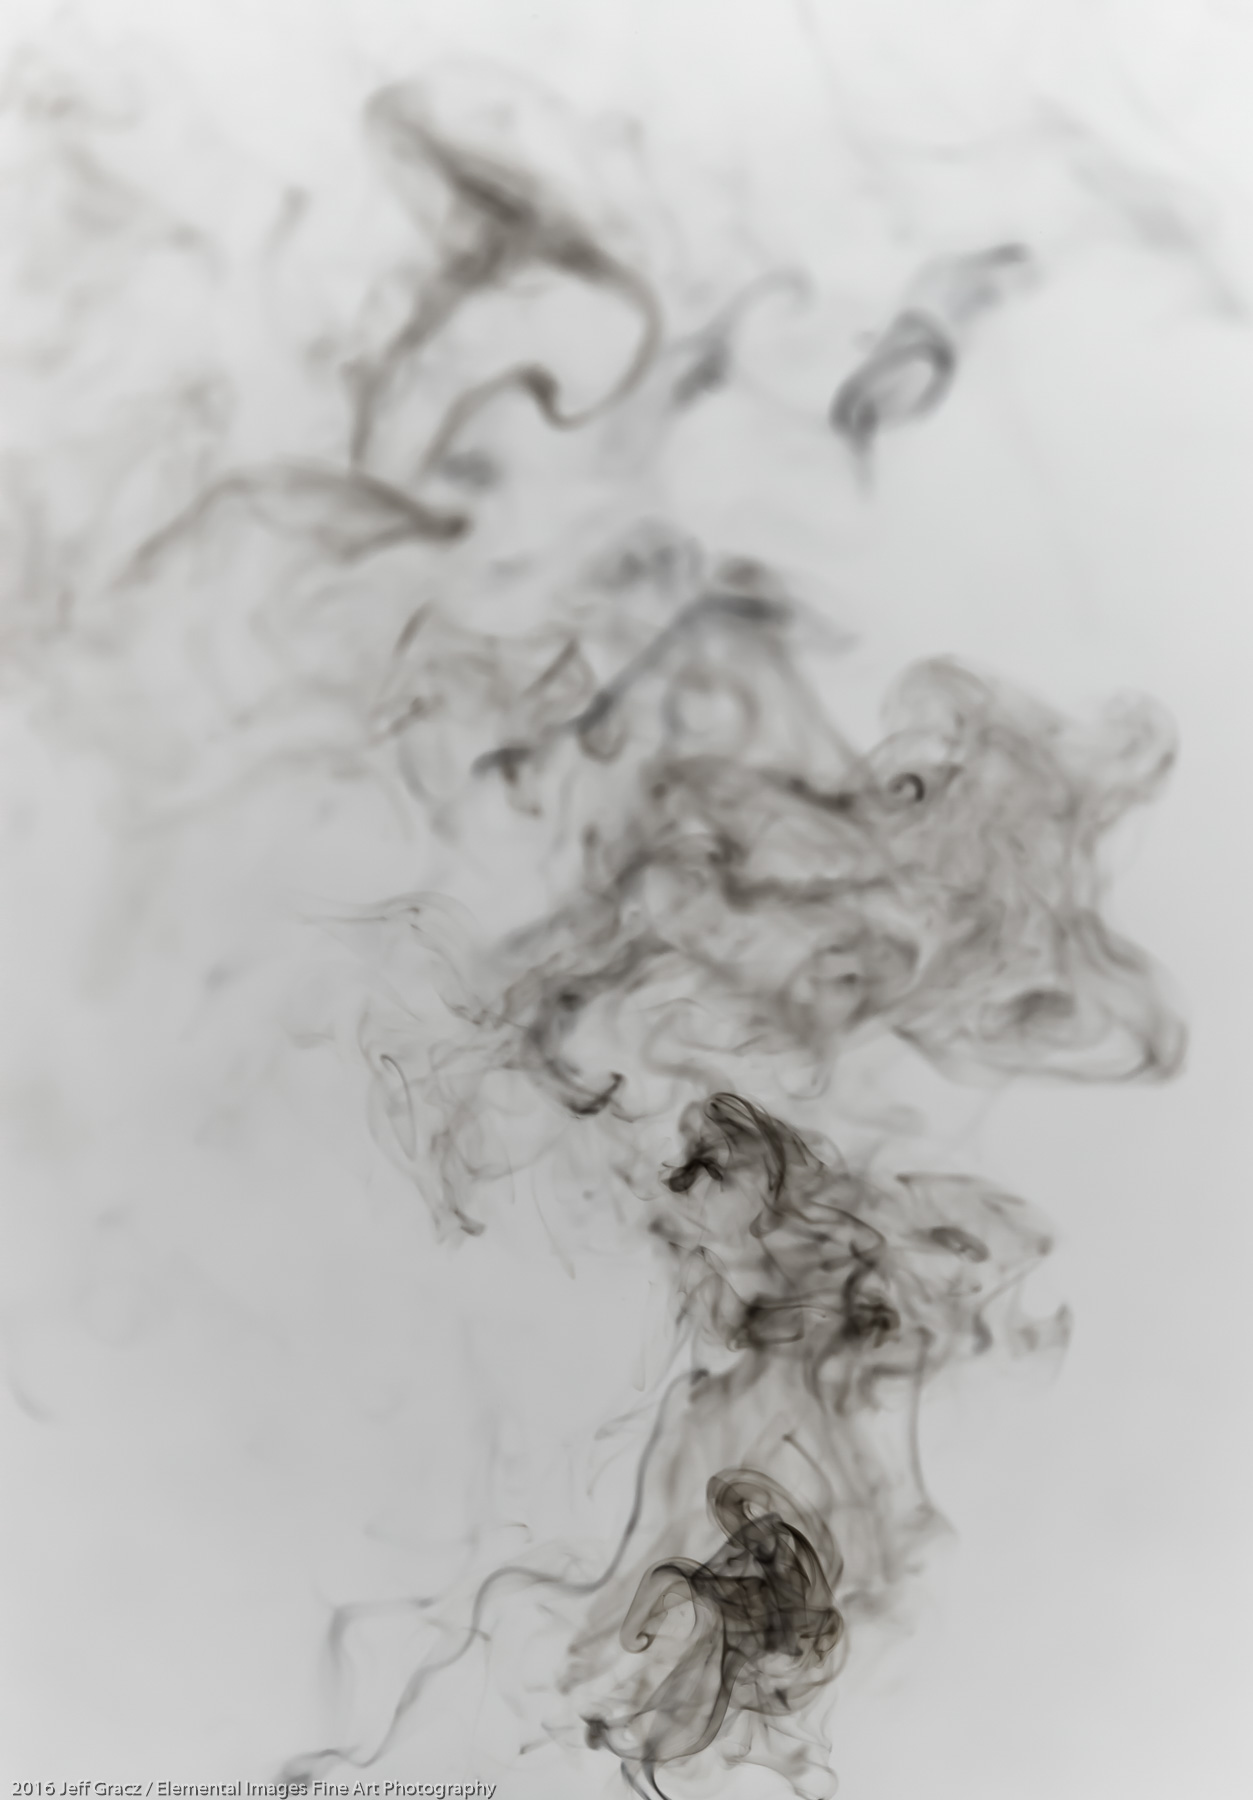 Smoke 13 | Vancouver | WA | USA - © 2016 Jeff Gracz / Elemental Images Fine Art Photography - All Rights Reserved Worldwide